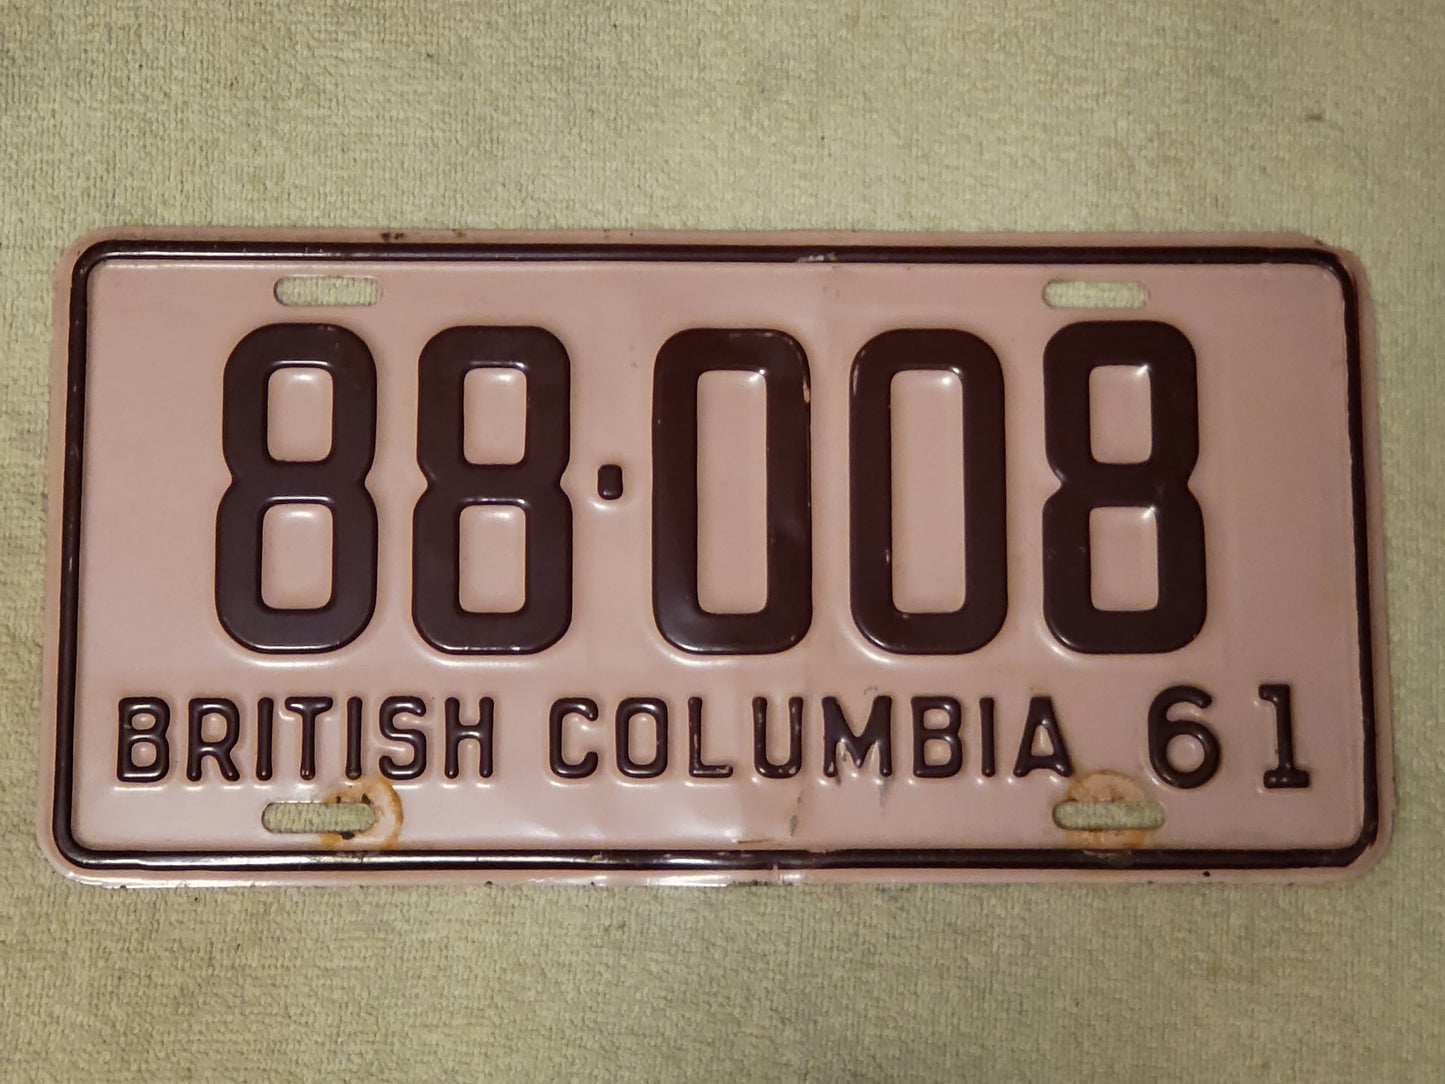 1961 British Columbia Canada License Plate Tag #88 008 Single Excellent Original